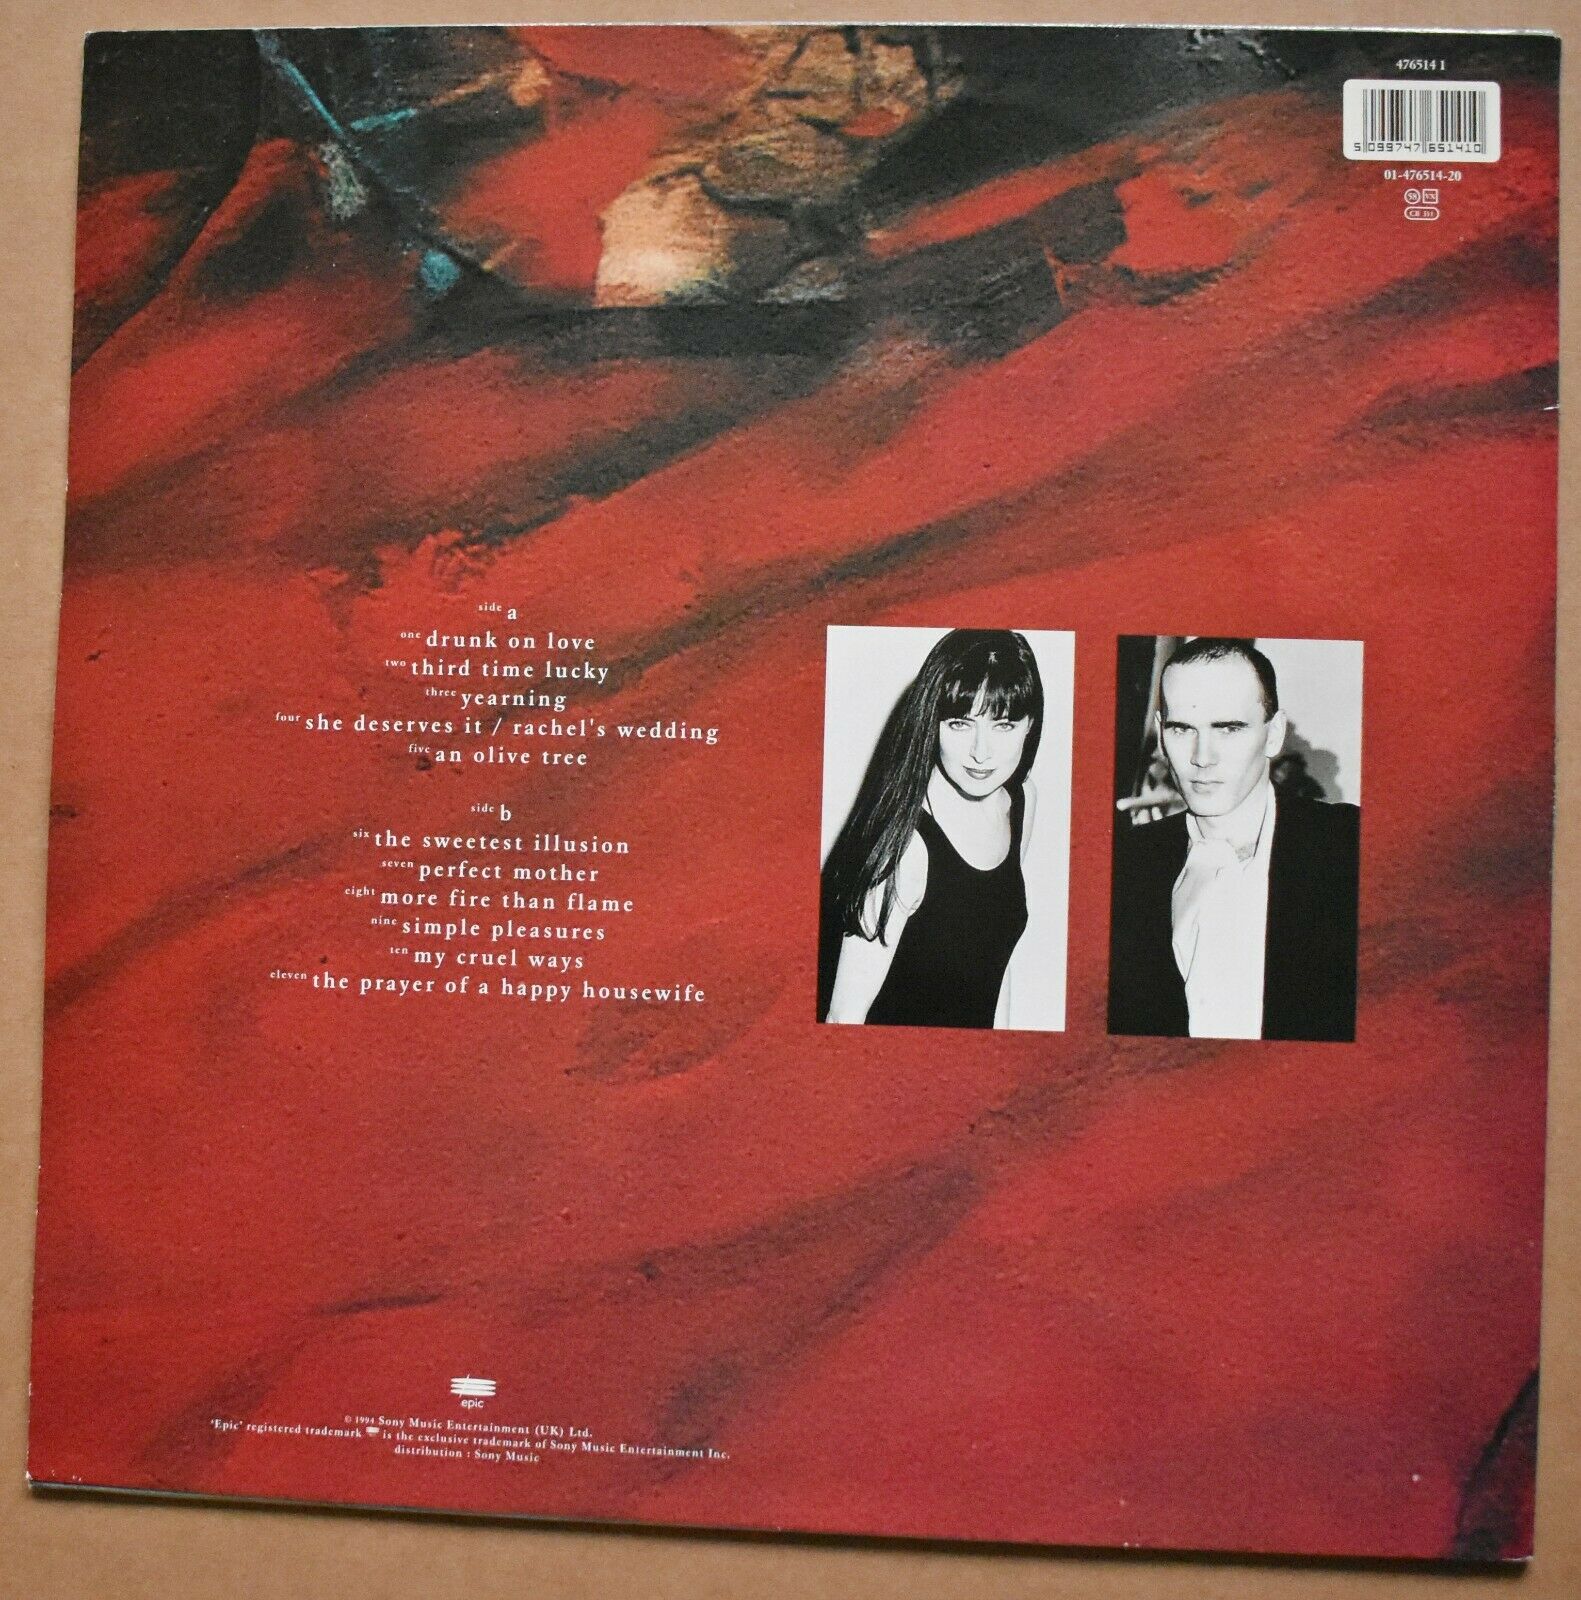 Basia /The Sweetest Illusion original LP